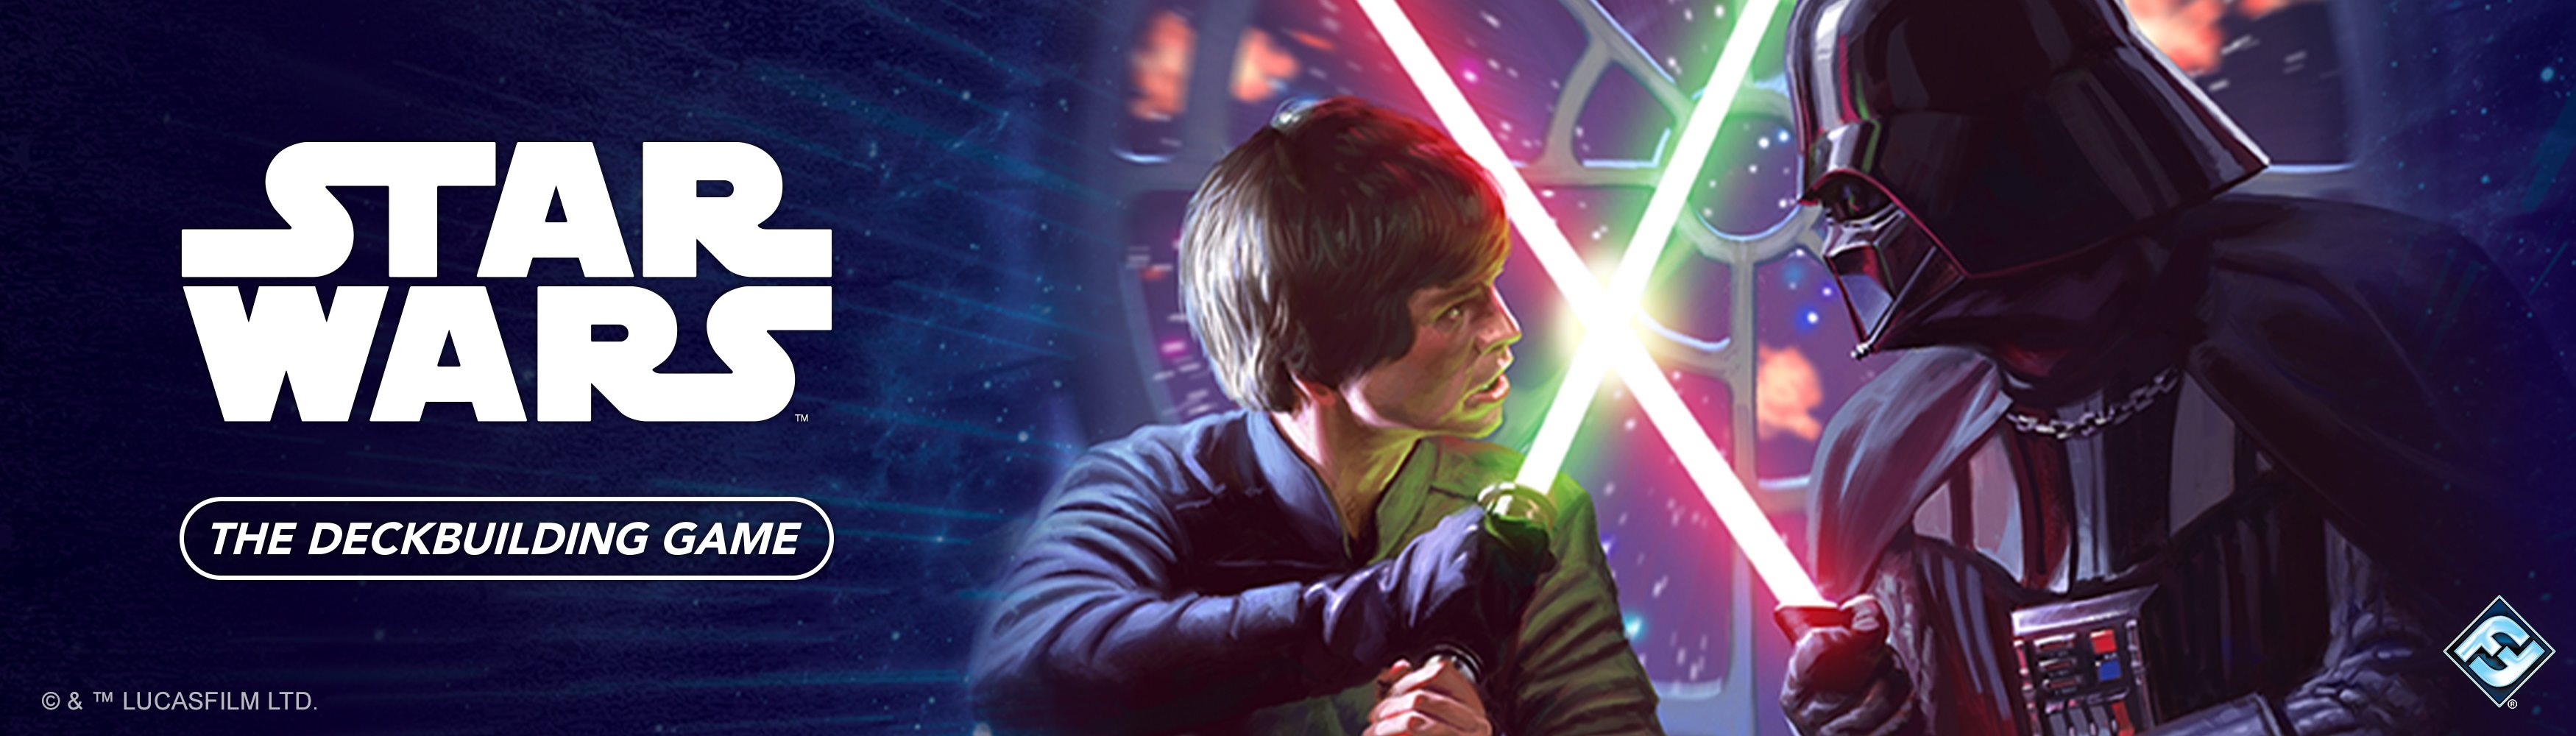 Star Wars: The Deckbuilding Game - Rules for 2v2 Downloadable Content